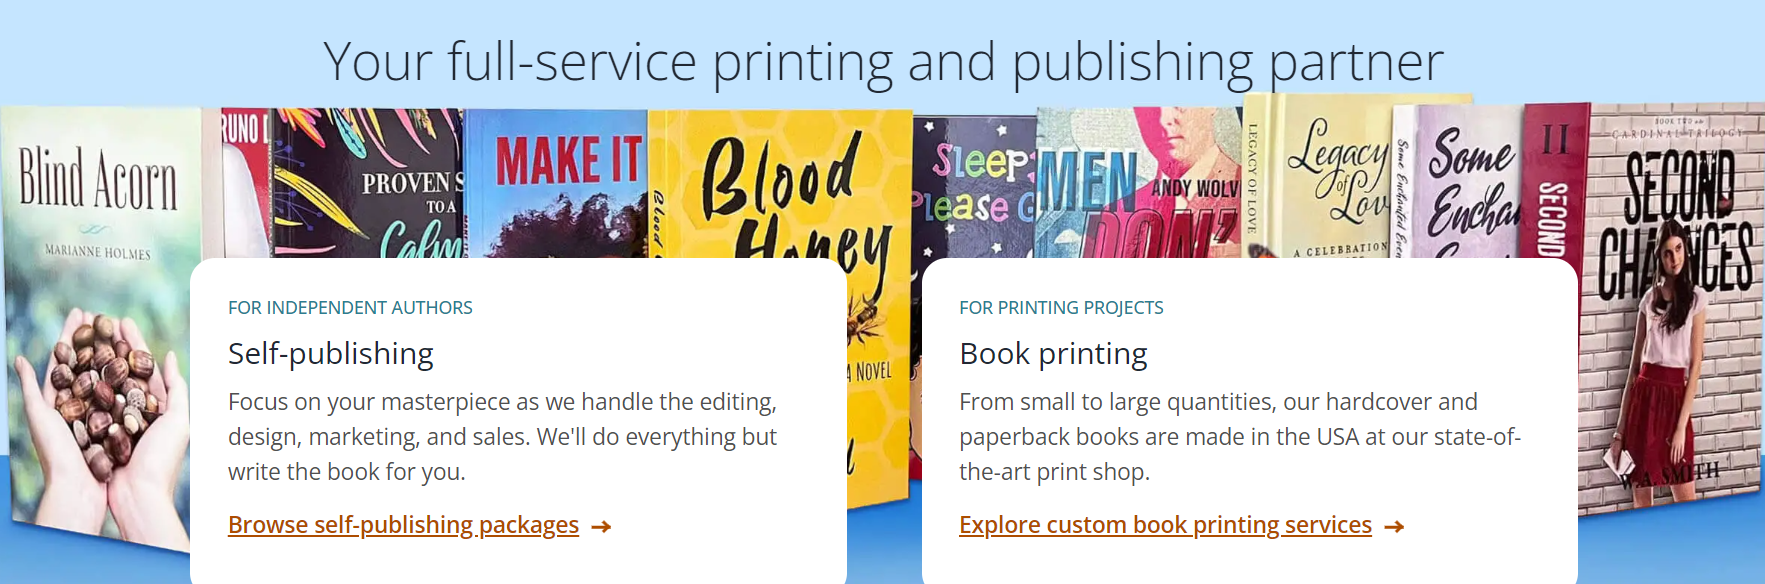 BookBaby book marketing company homepage